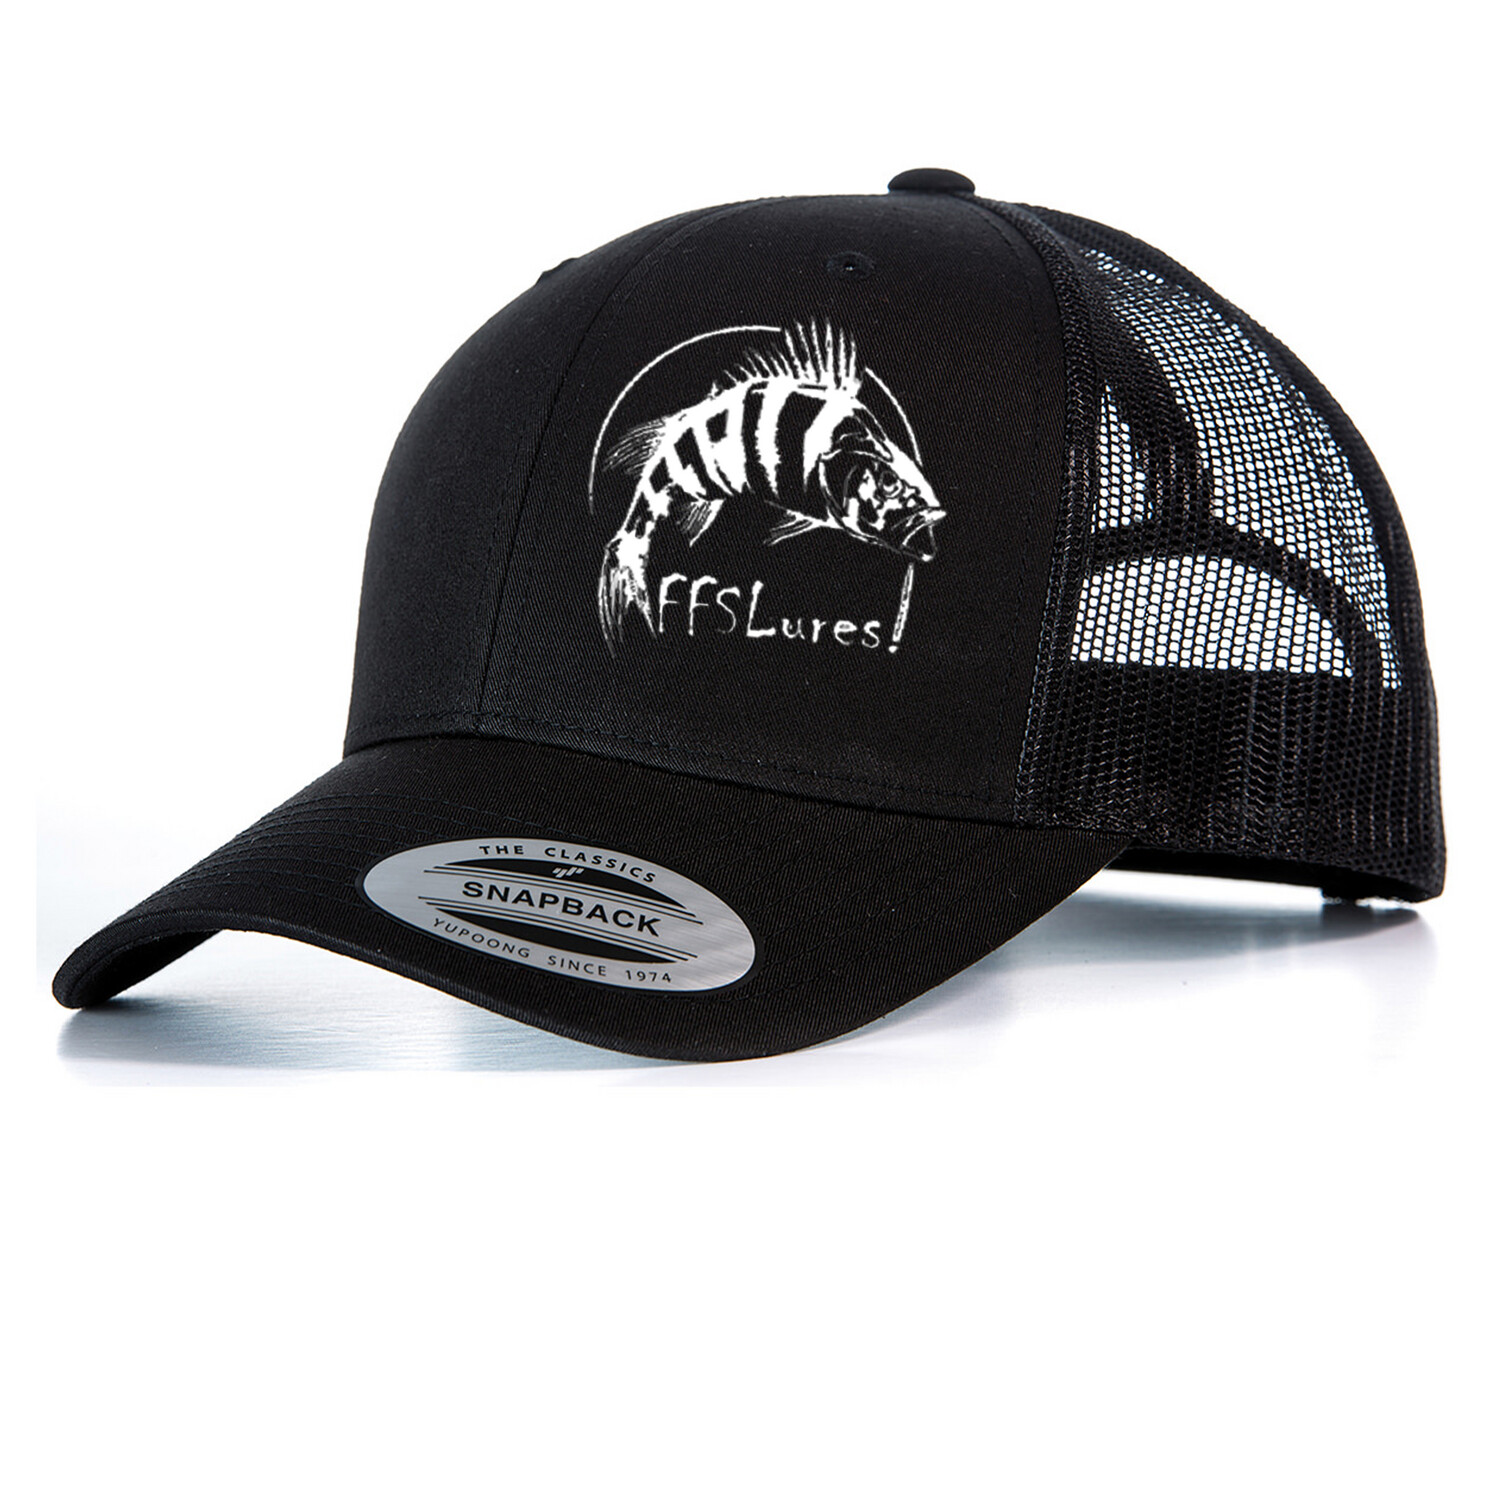 Flexfit Retro trucker cap - embroidered